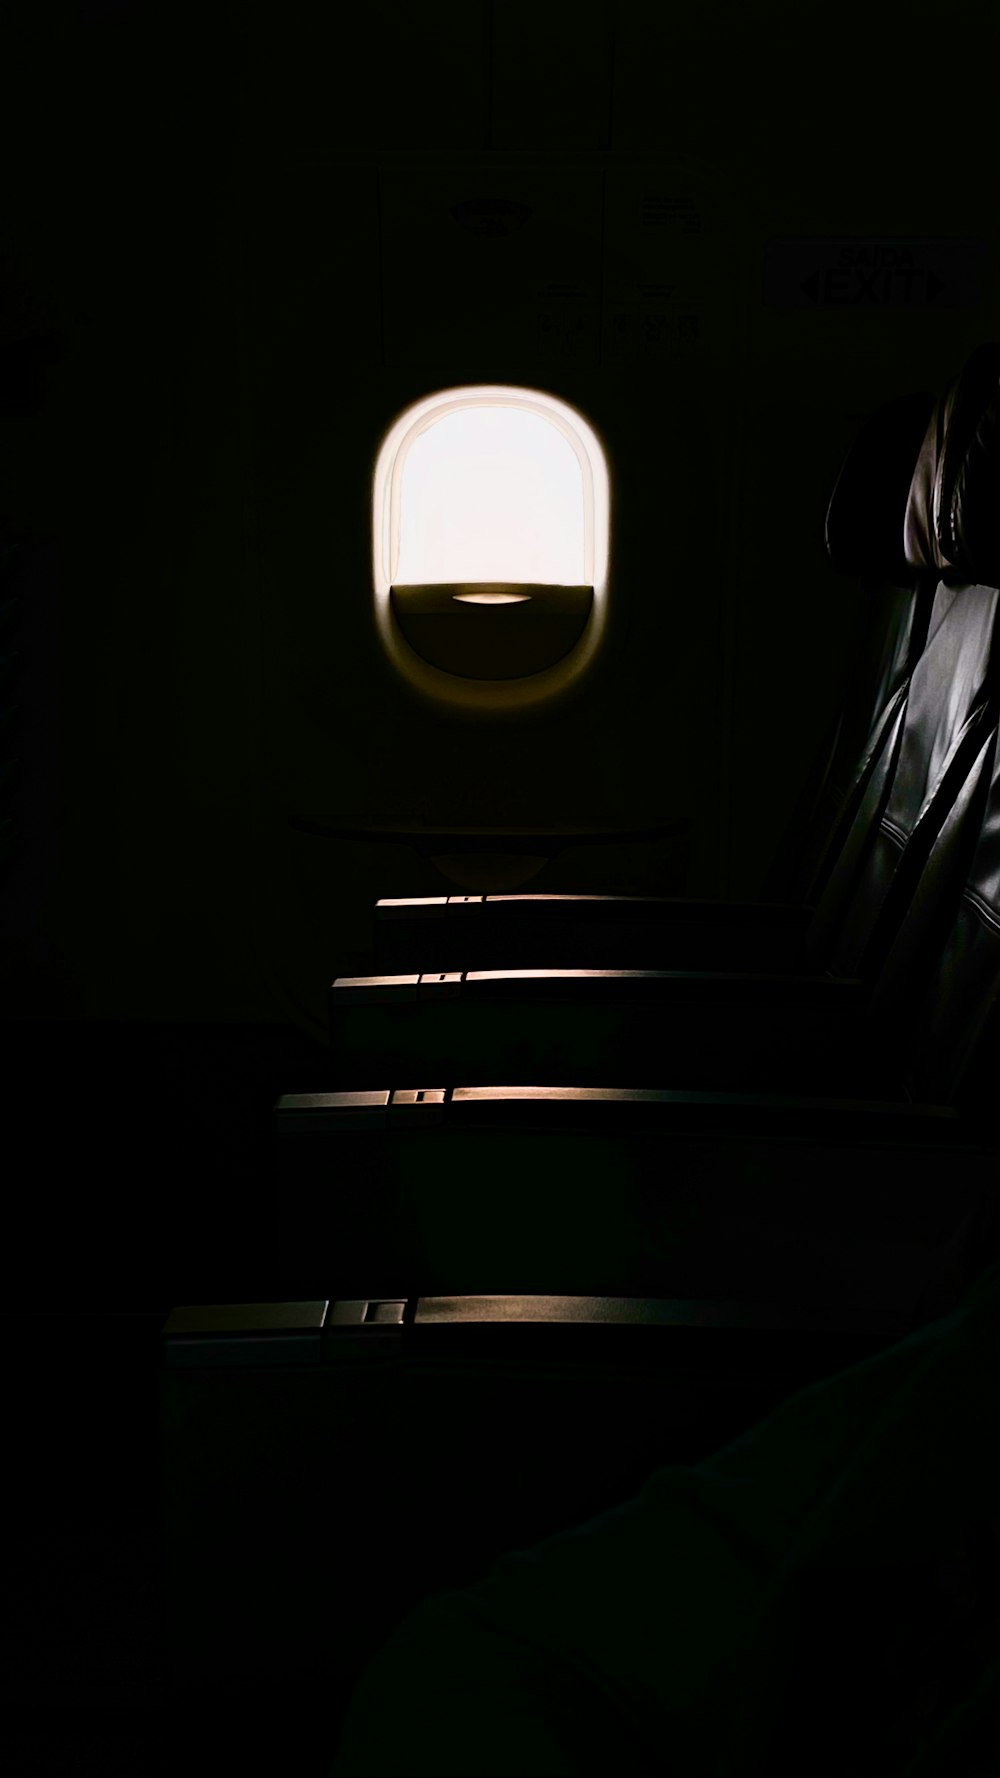 black and white airplane seat